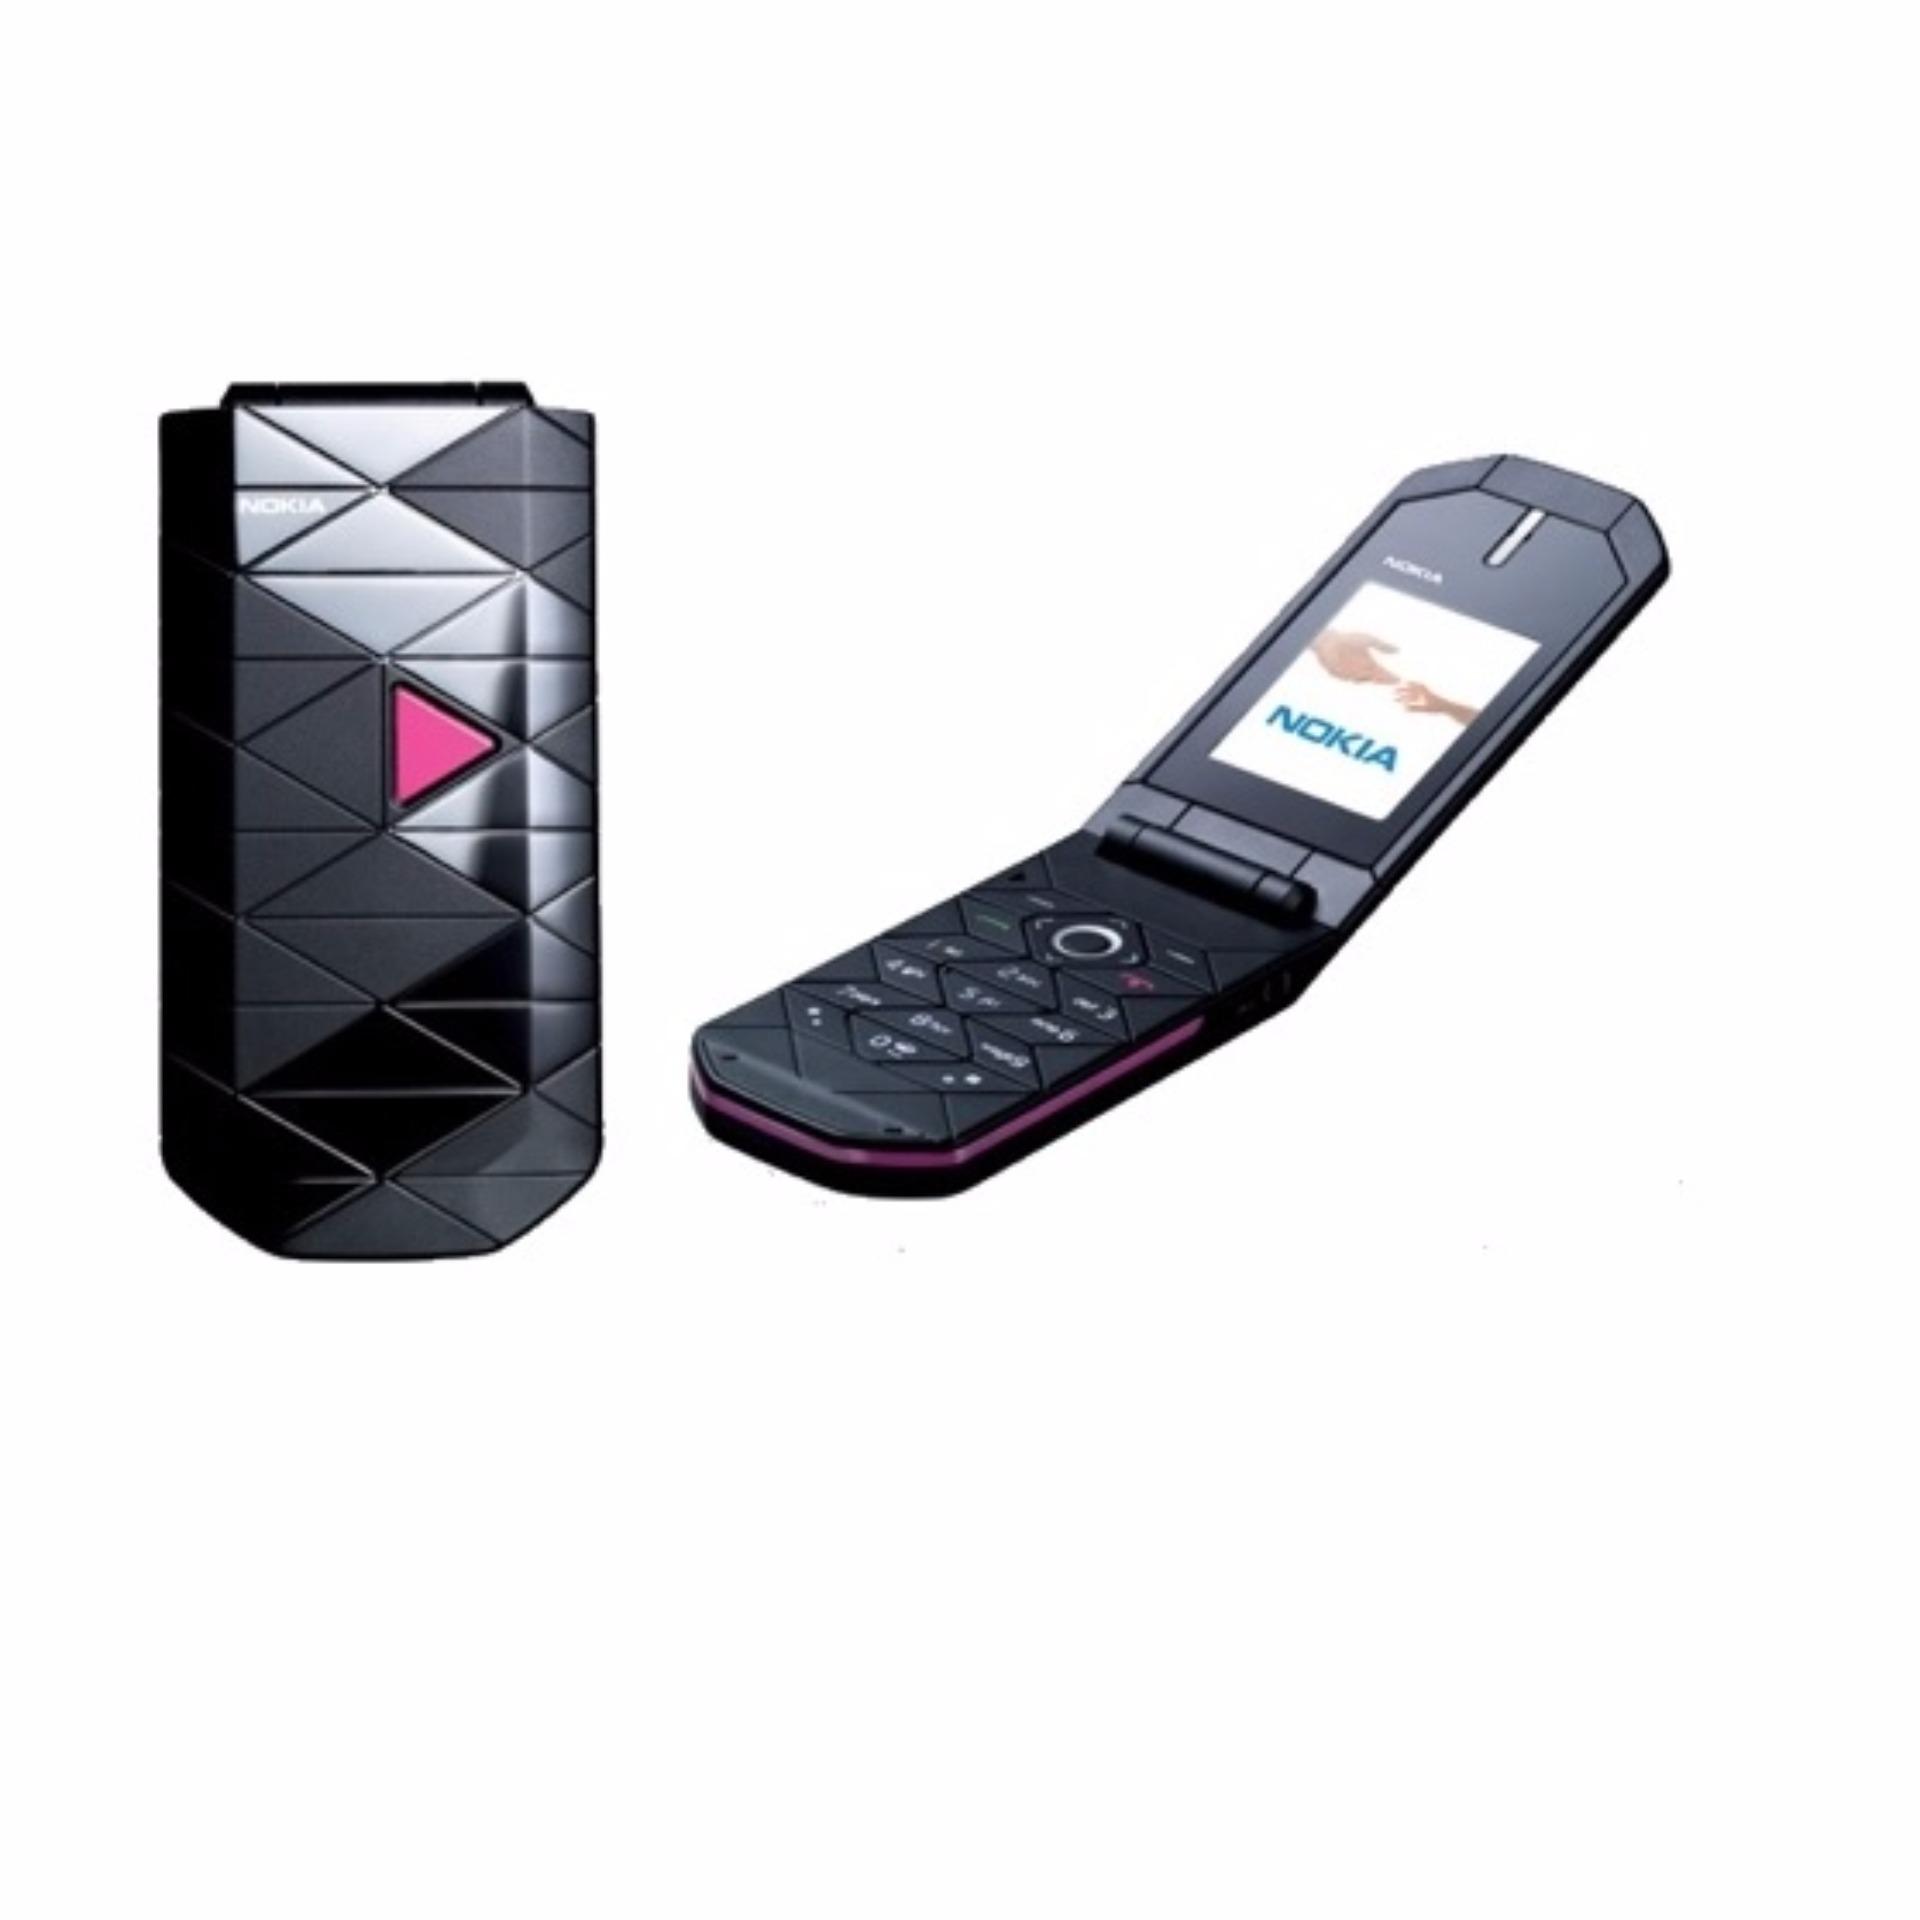 Handphone Nokia Type 7070 Lipat